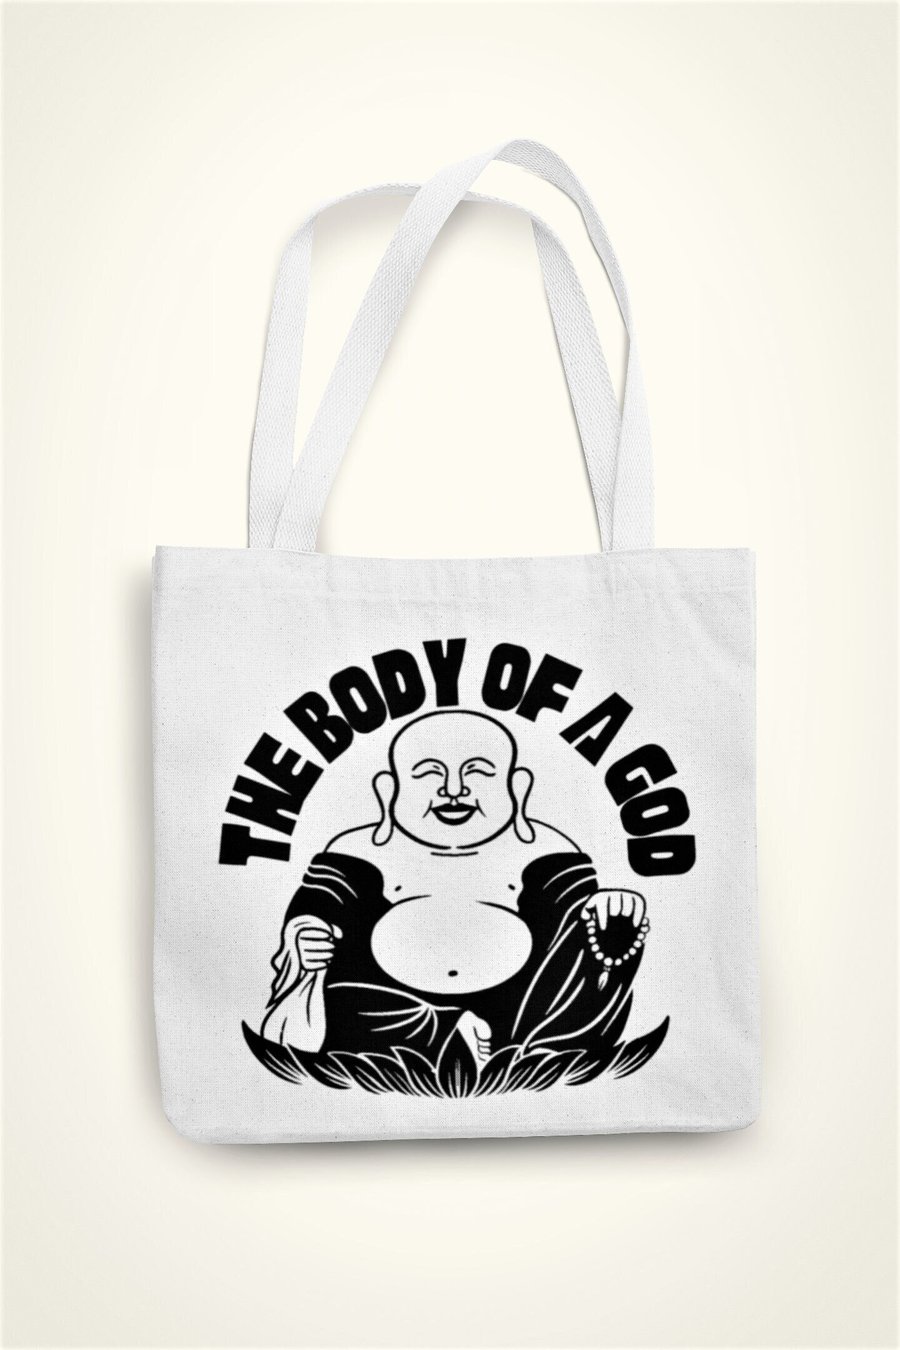 The Body Of A God Tote Bag Funny Unfit Fat Buddha Shopper Bag Novelty Birthday 